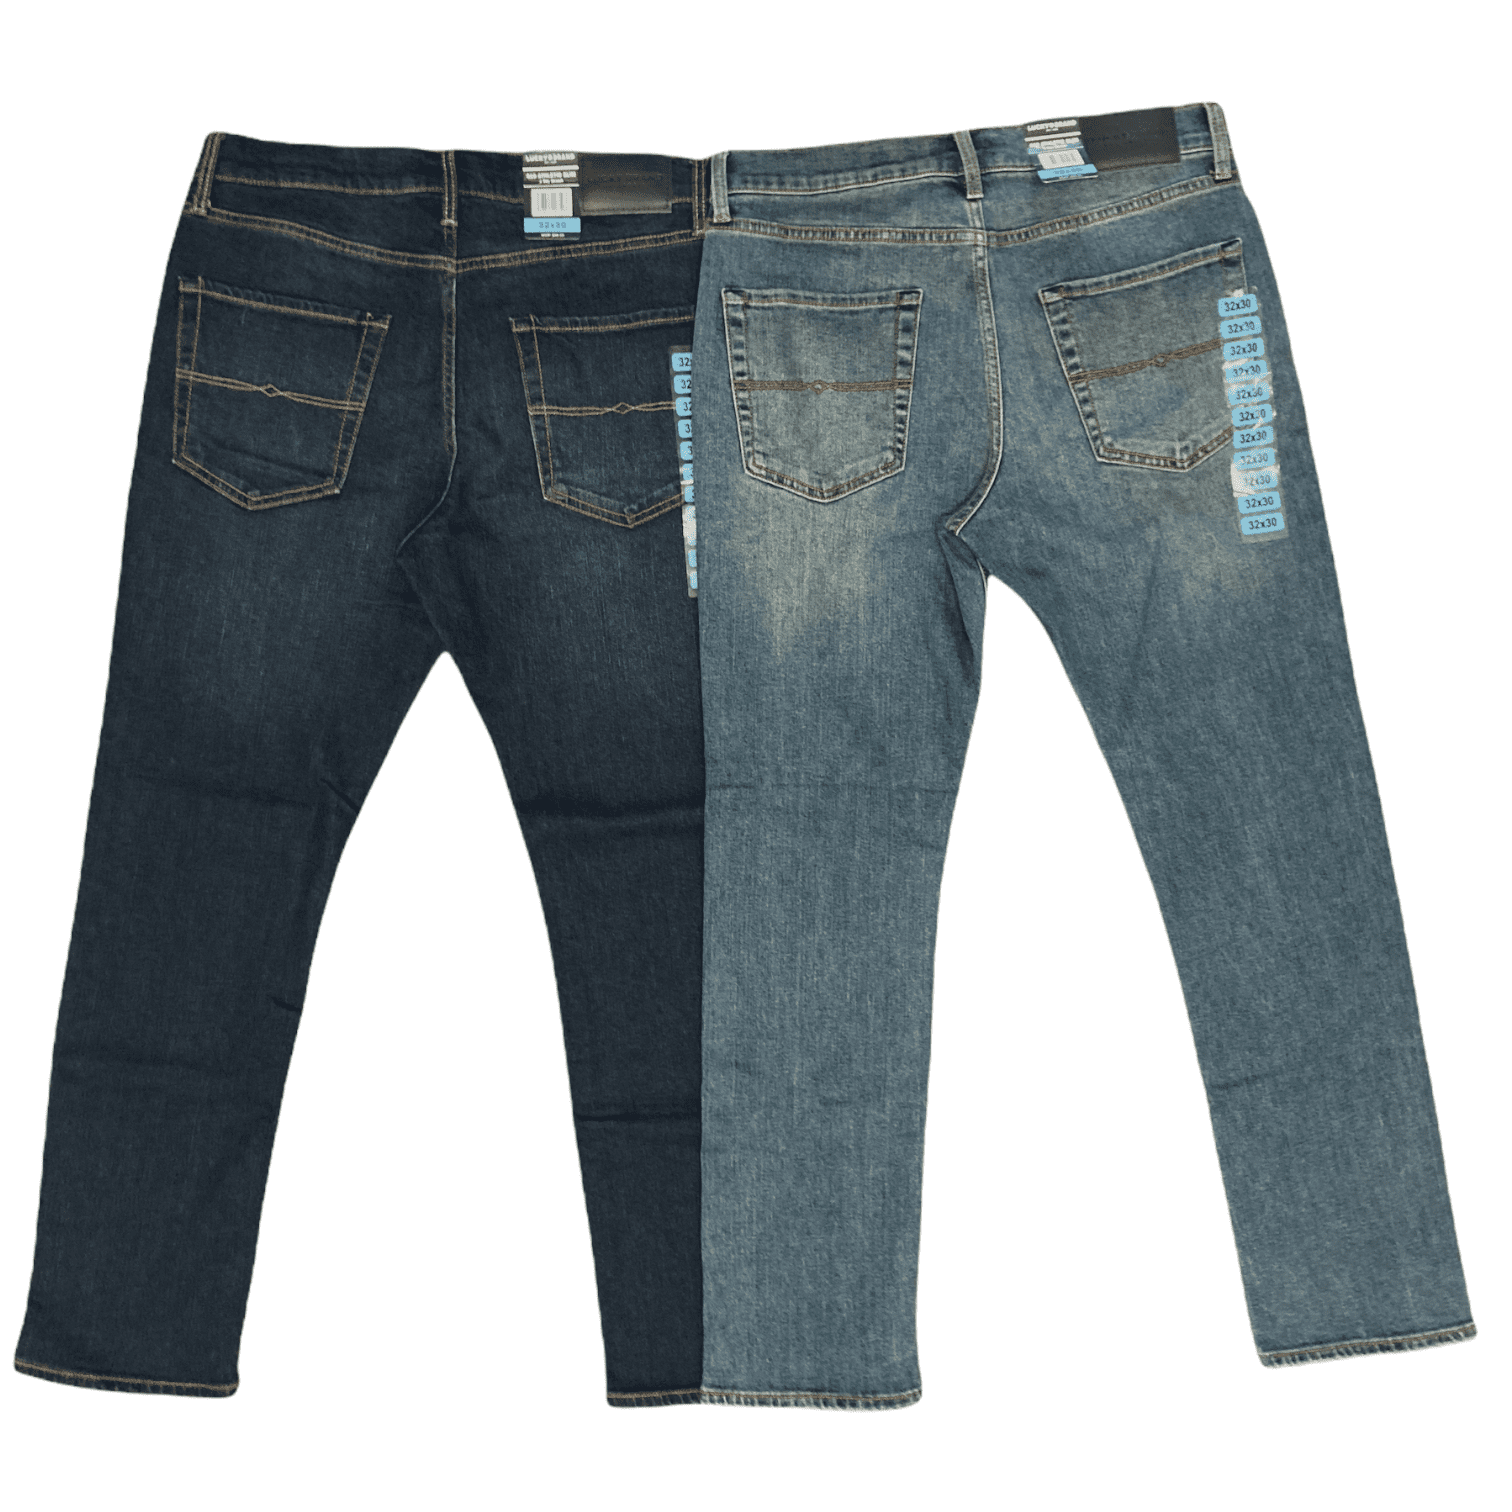 Lucky Brand Men's 410 Athletic Slim Fit 2 Way Stretch 5 Pocket Jean  (Parivale, 32x30) 